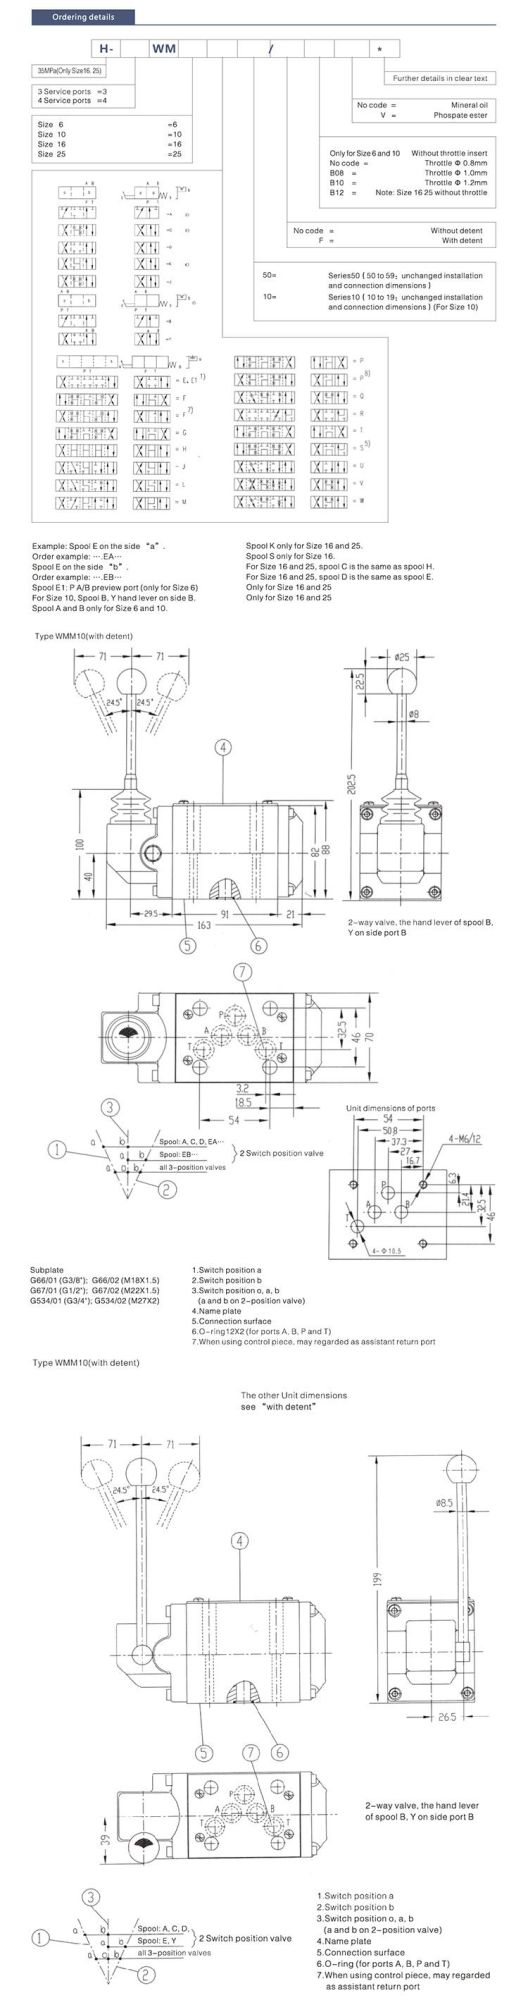 4WMM10 hydraulic Rexroth  type manual control valve